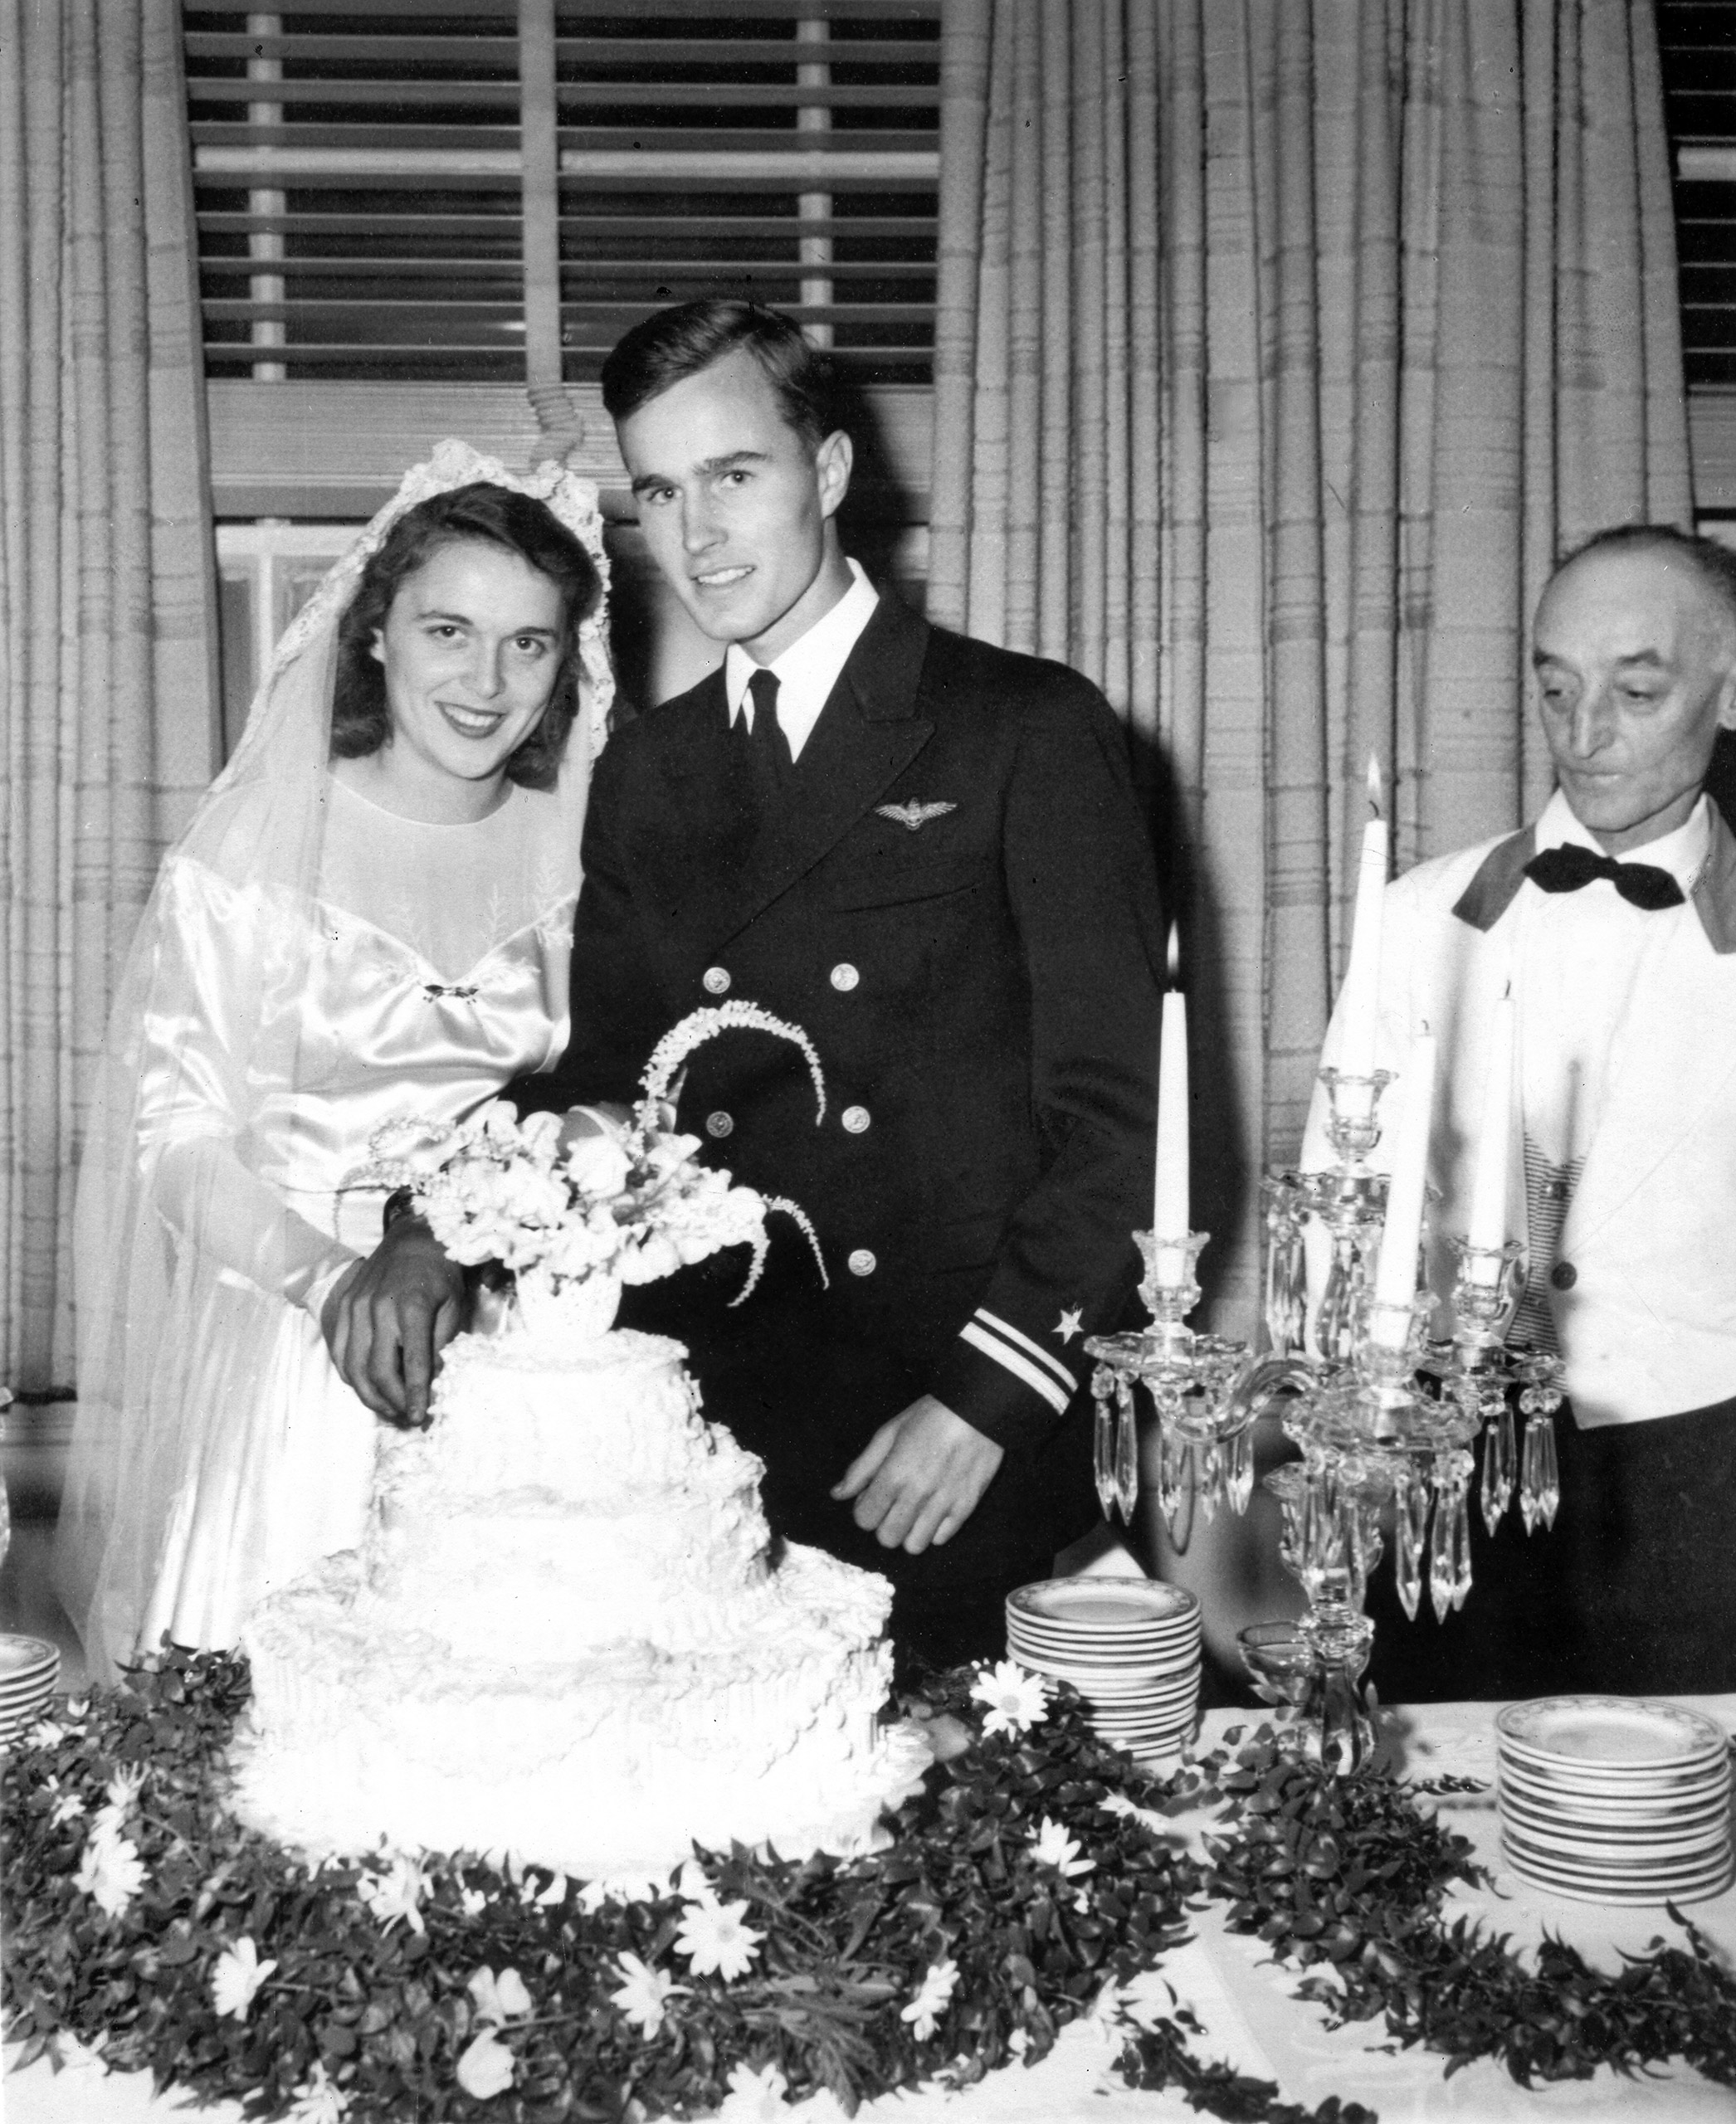 George and Barbara Bush cut their wedding cake, Rye, New York on Jan. 6, 1945.